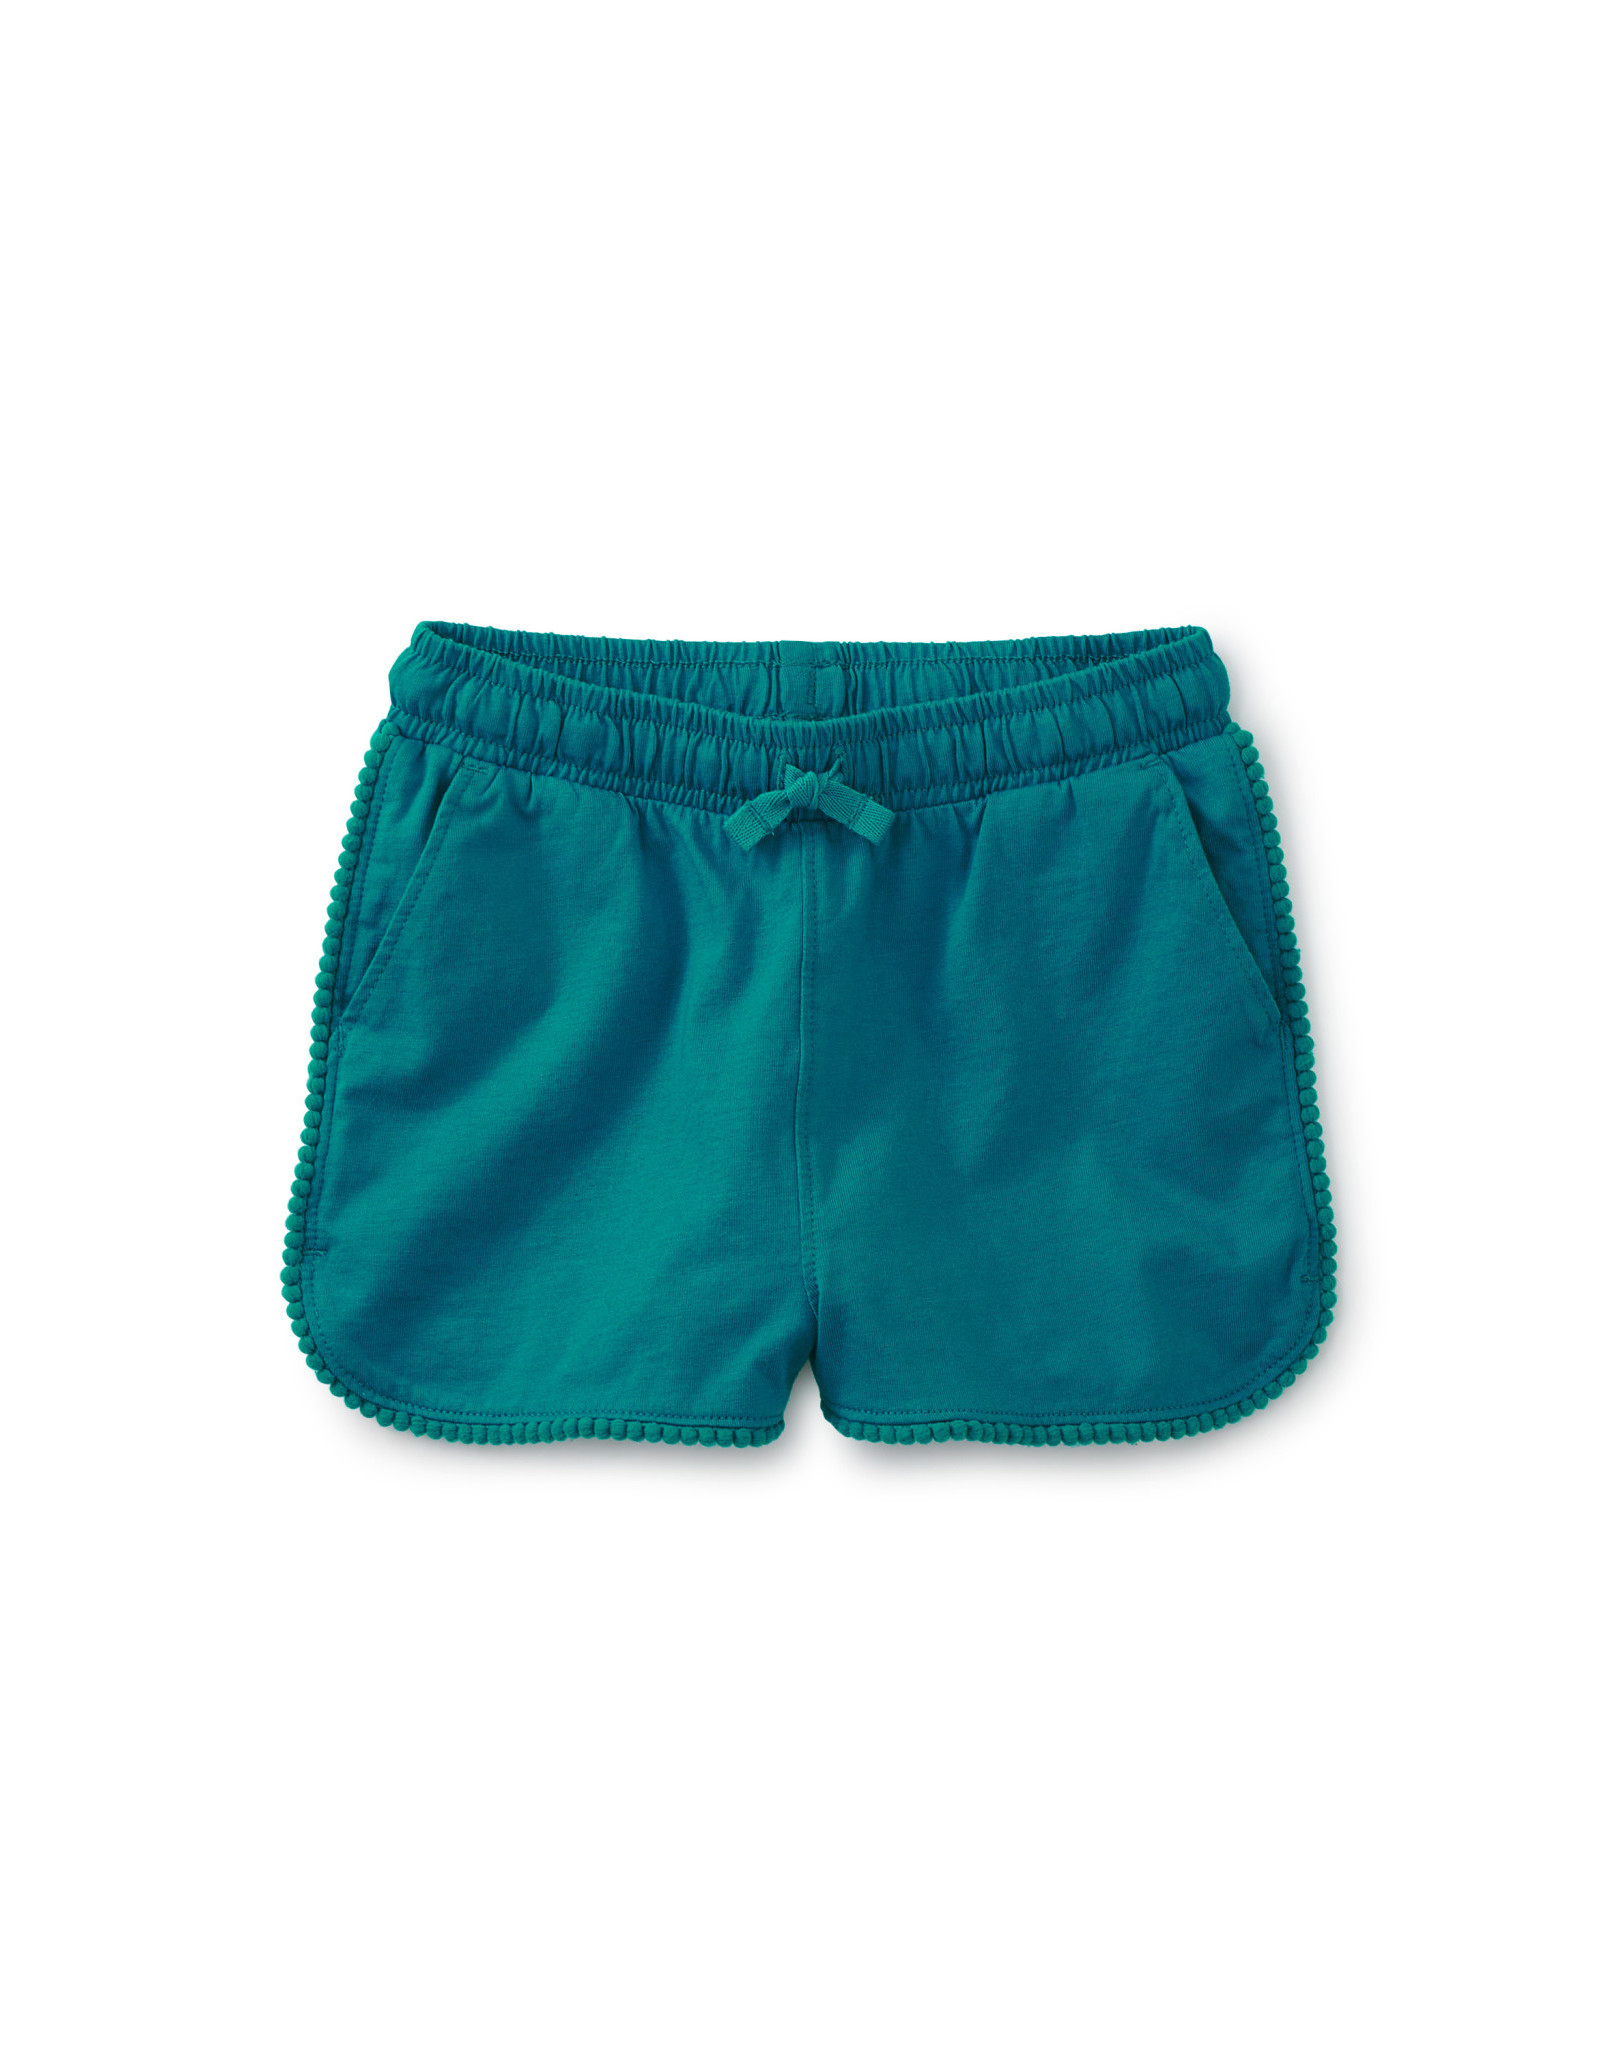 Tea Collection Pom Pom Gym Shorts - Enamel Blue